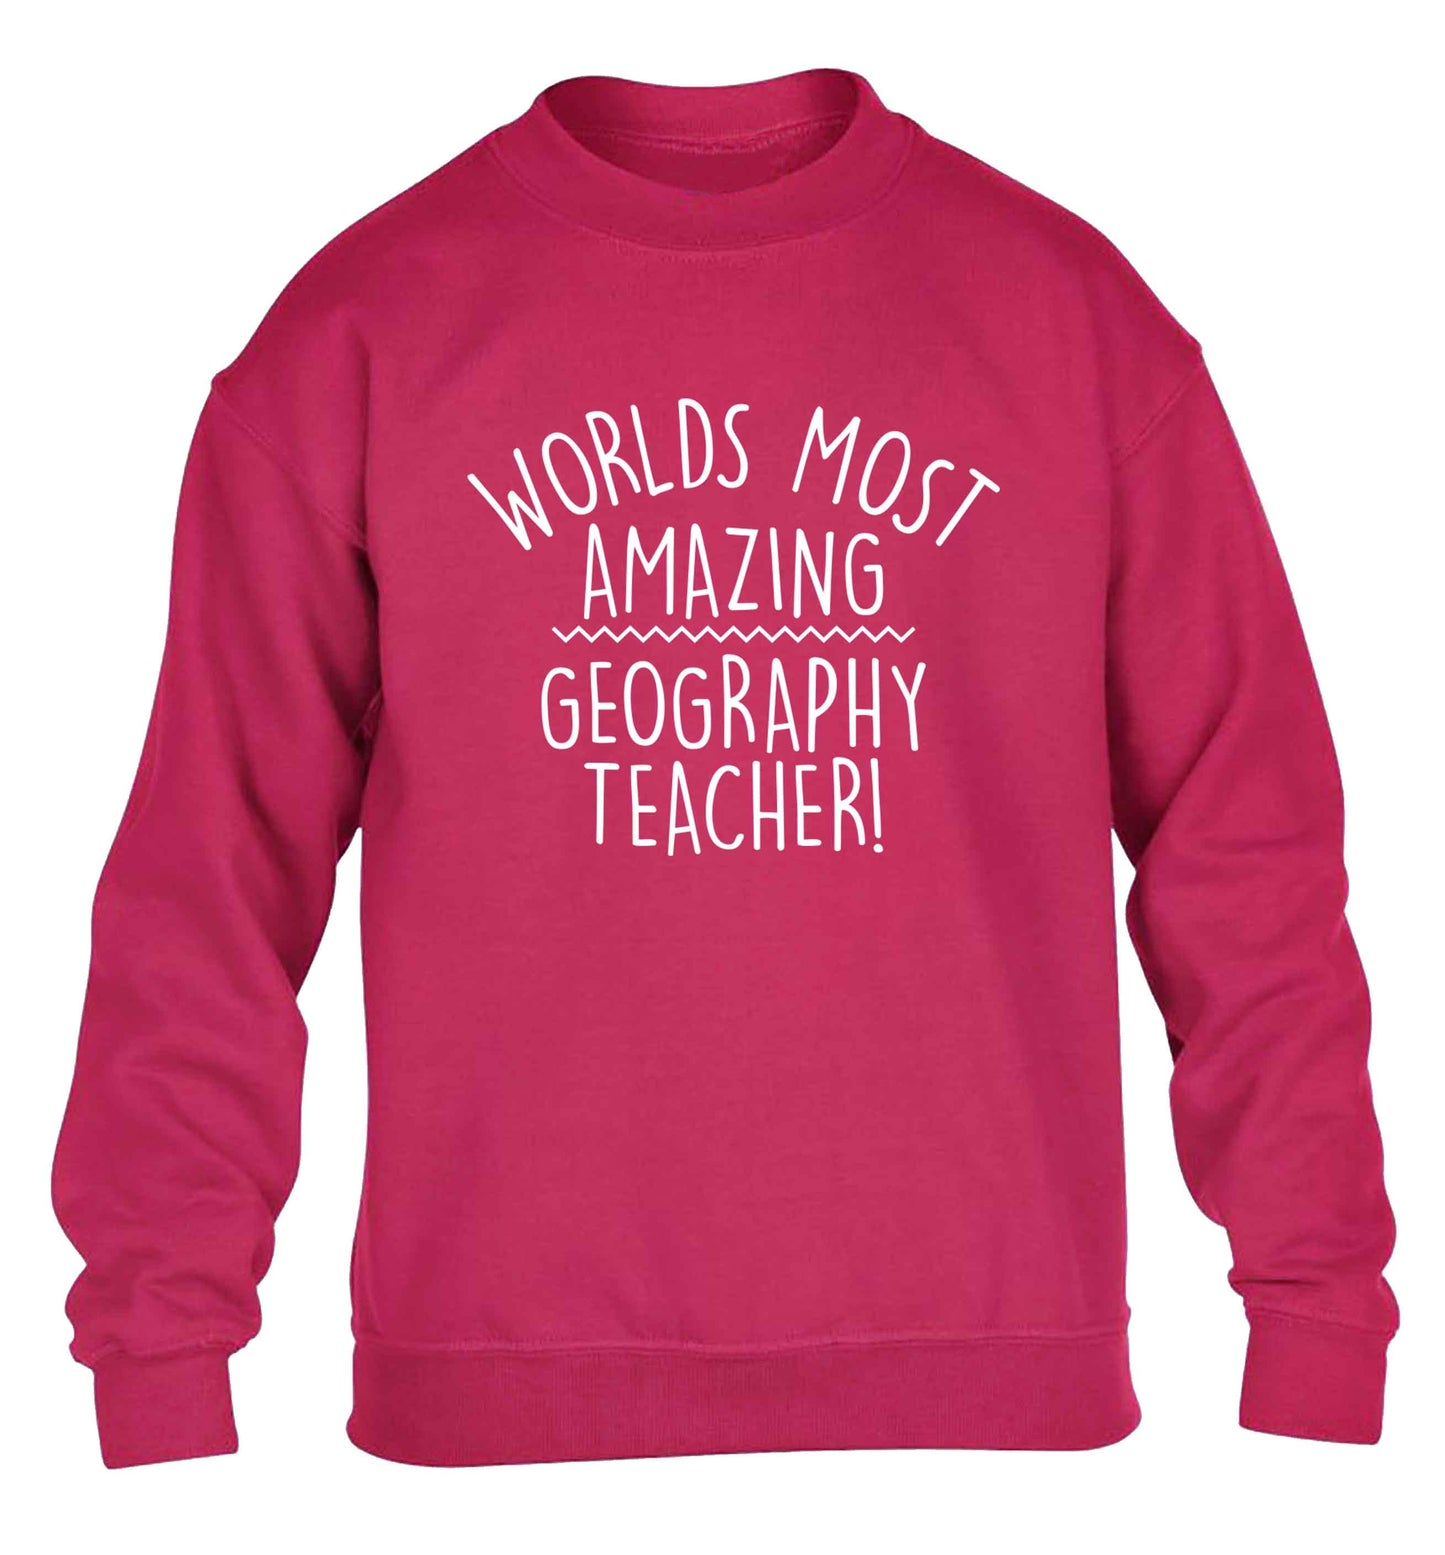 Worlds most amazing geography teacher children's pink sweater 12-13 Years